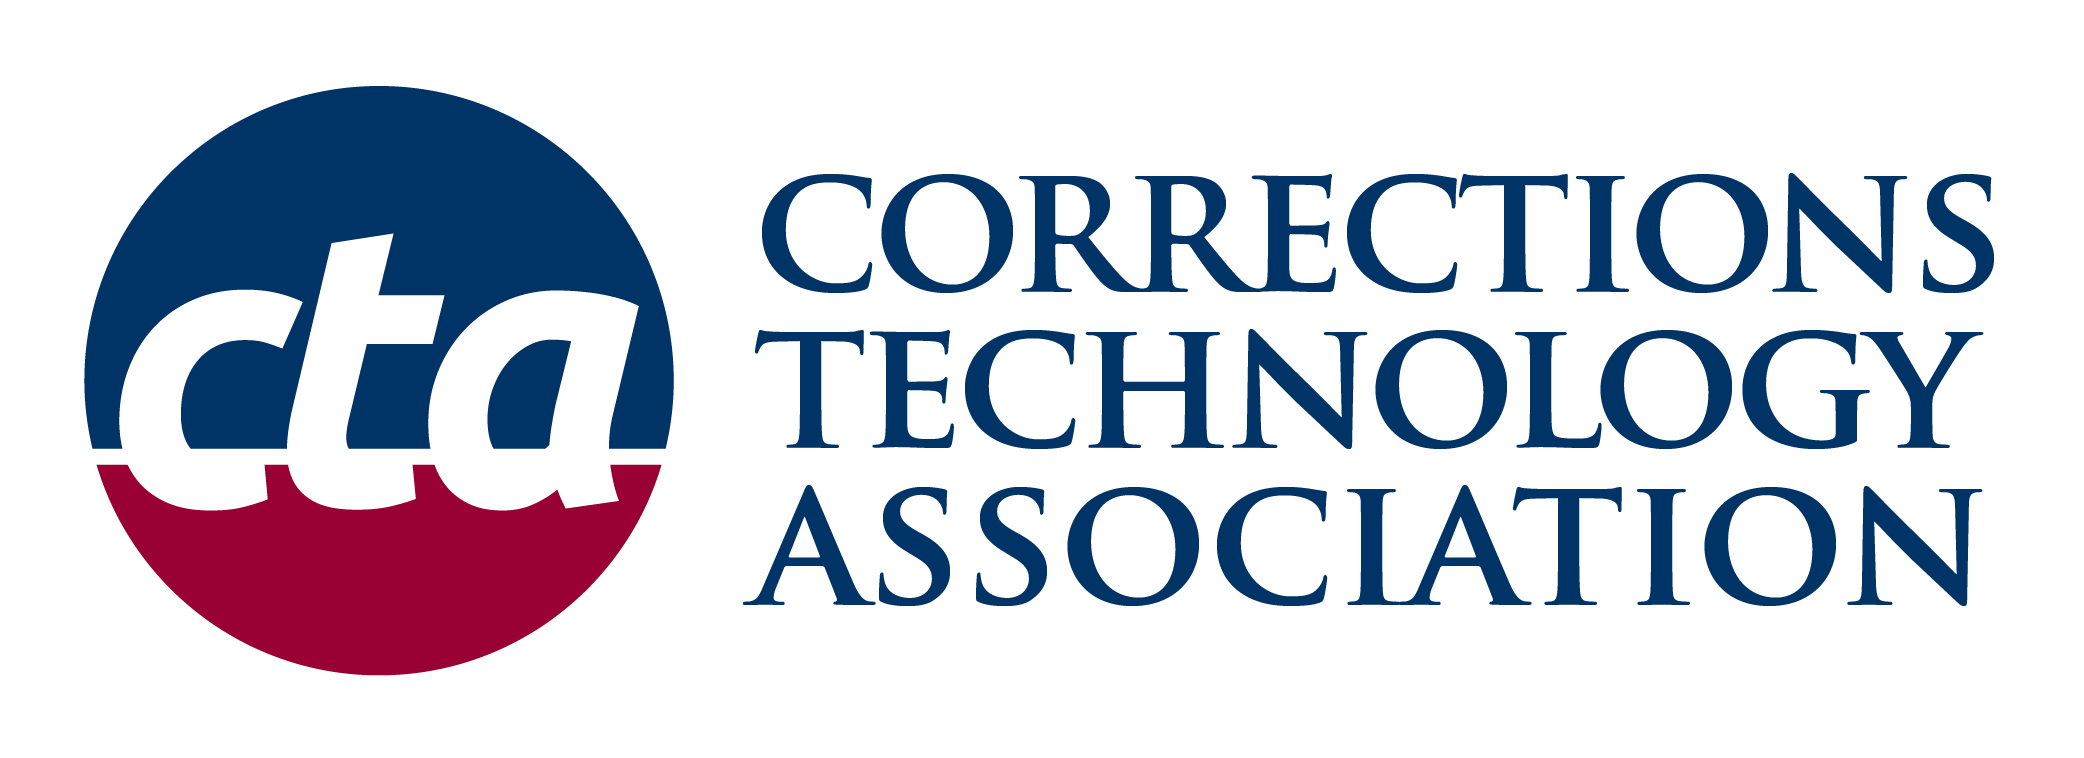 Corrections Technology Association